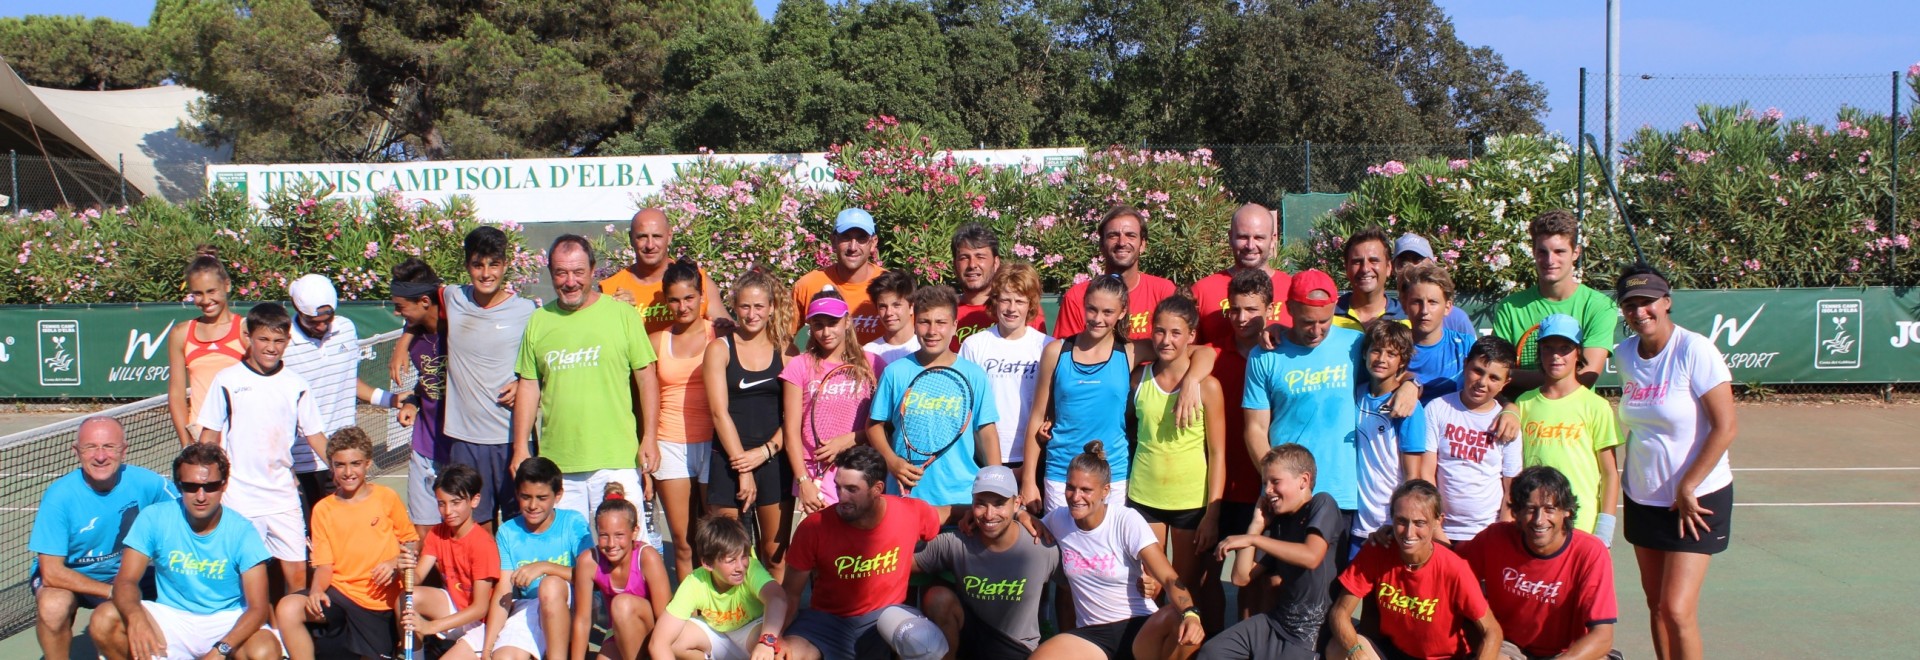 Go Tennis Junior Supercamp with Riccardo Piatti - Isola D'elba, Tuscany